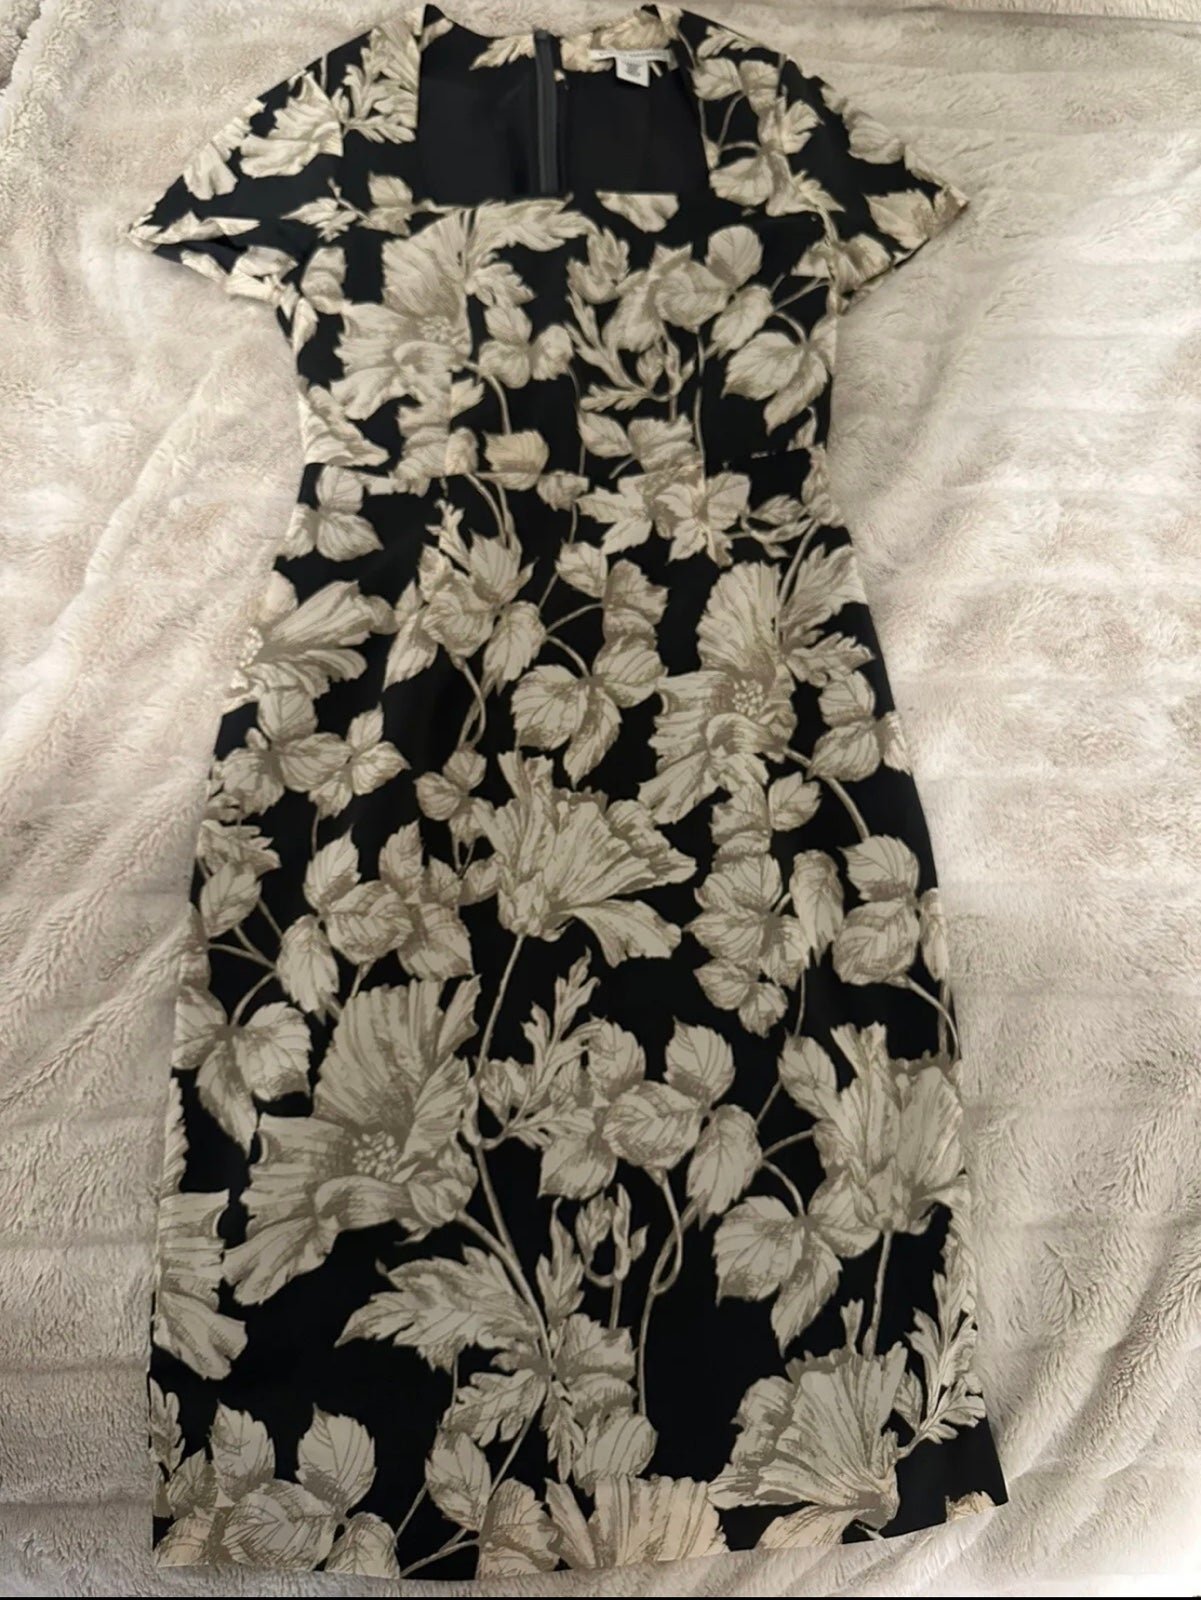 Banna Republic Floral Dress Size Petite 00 aYsmC0oAX